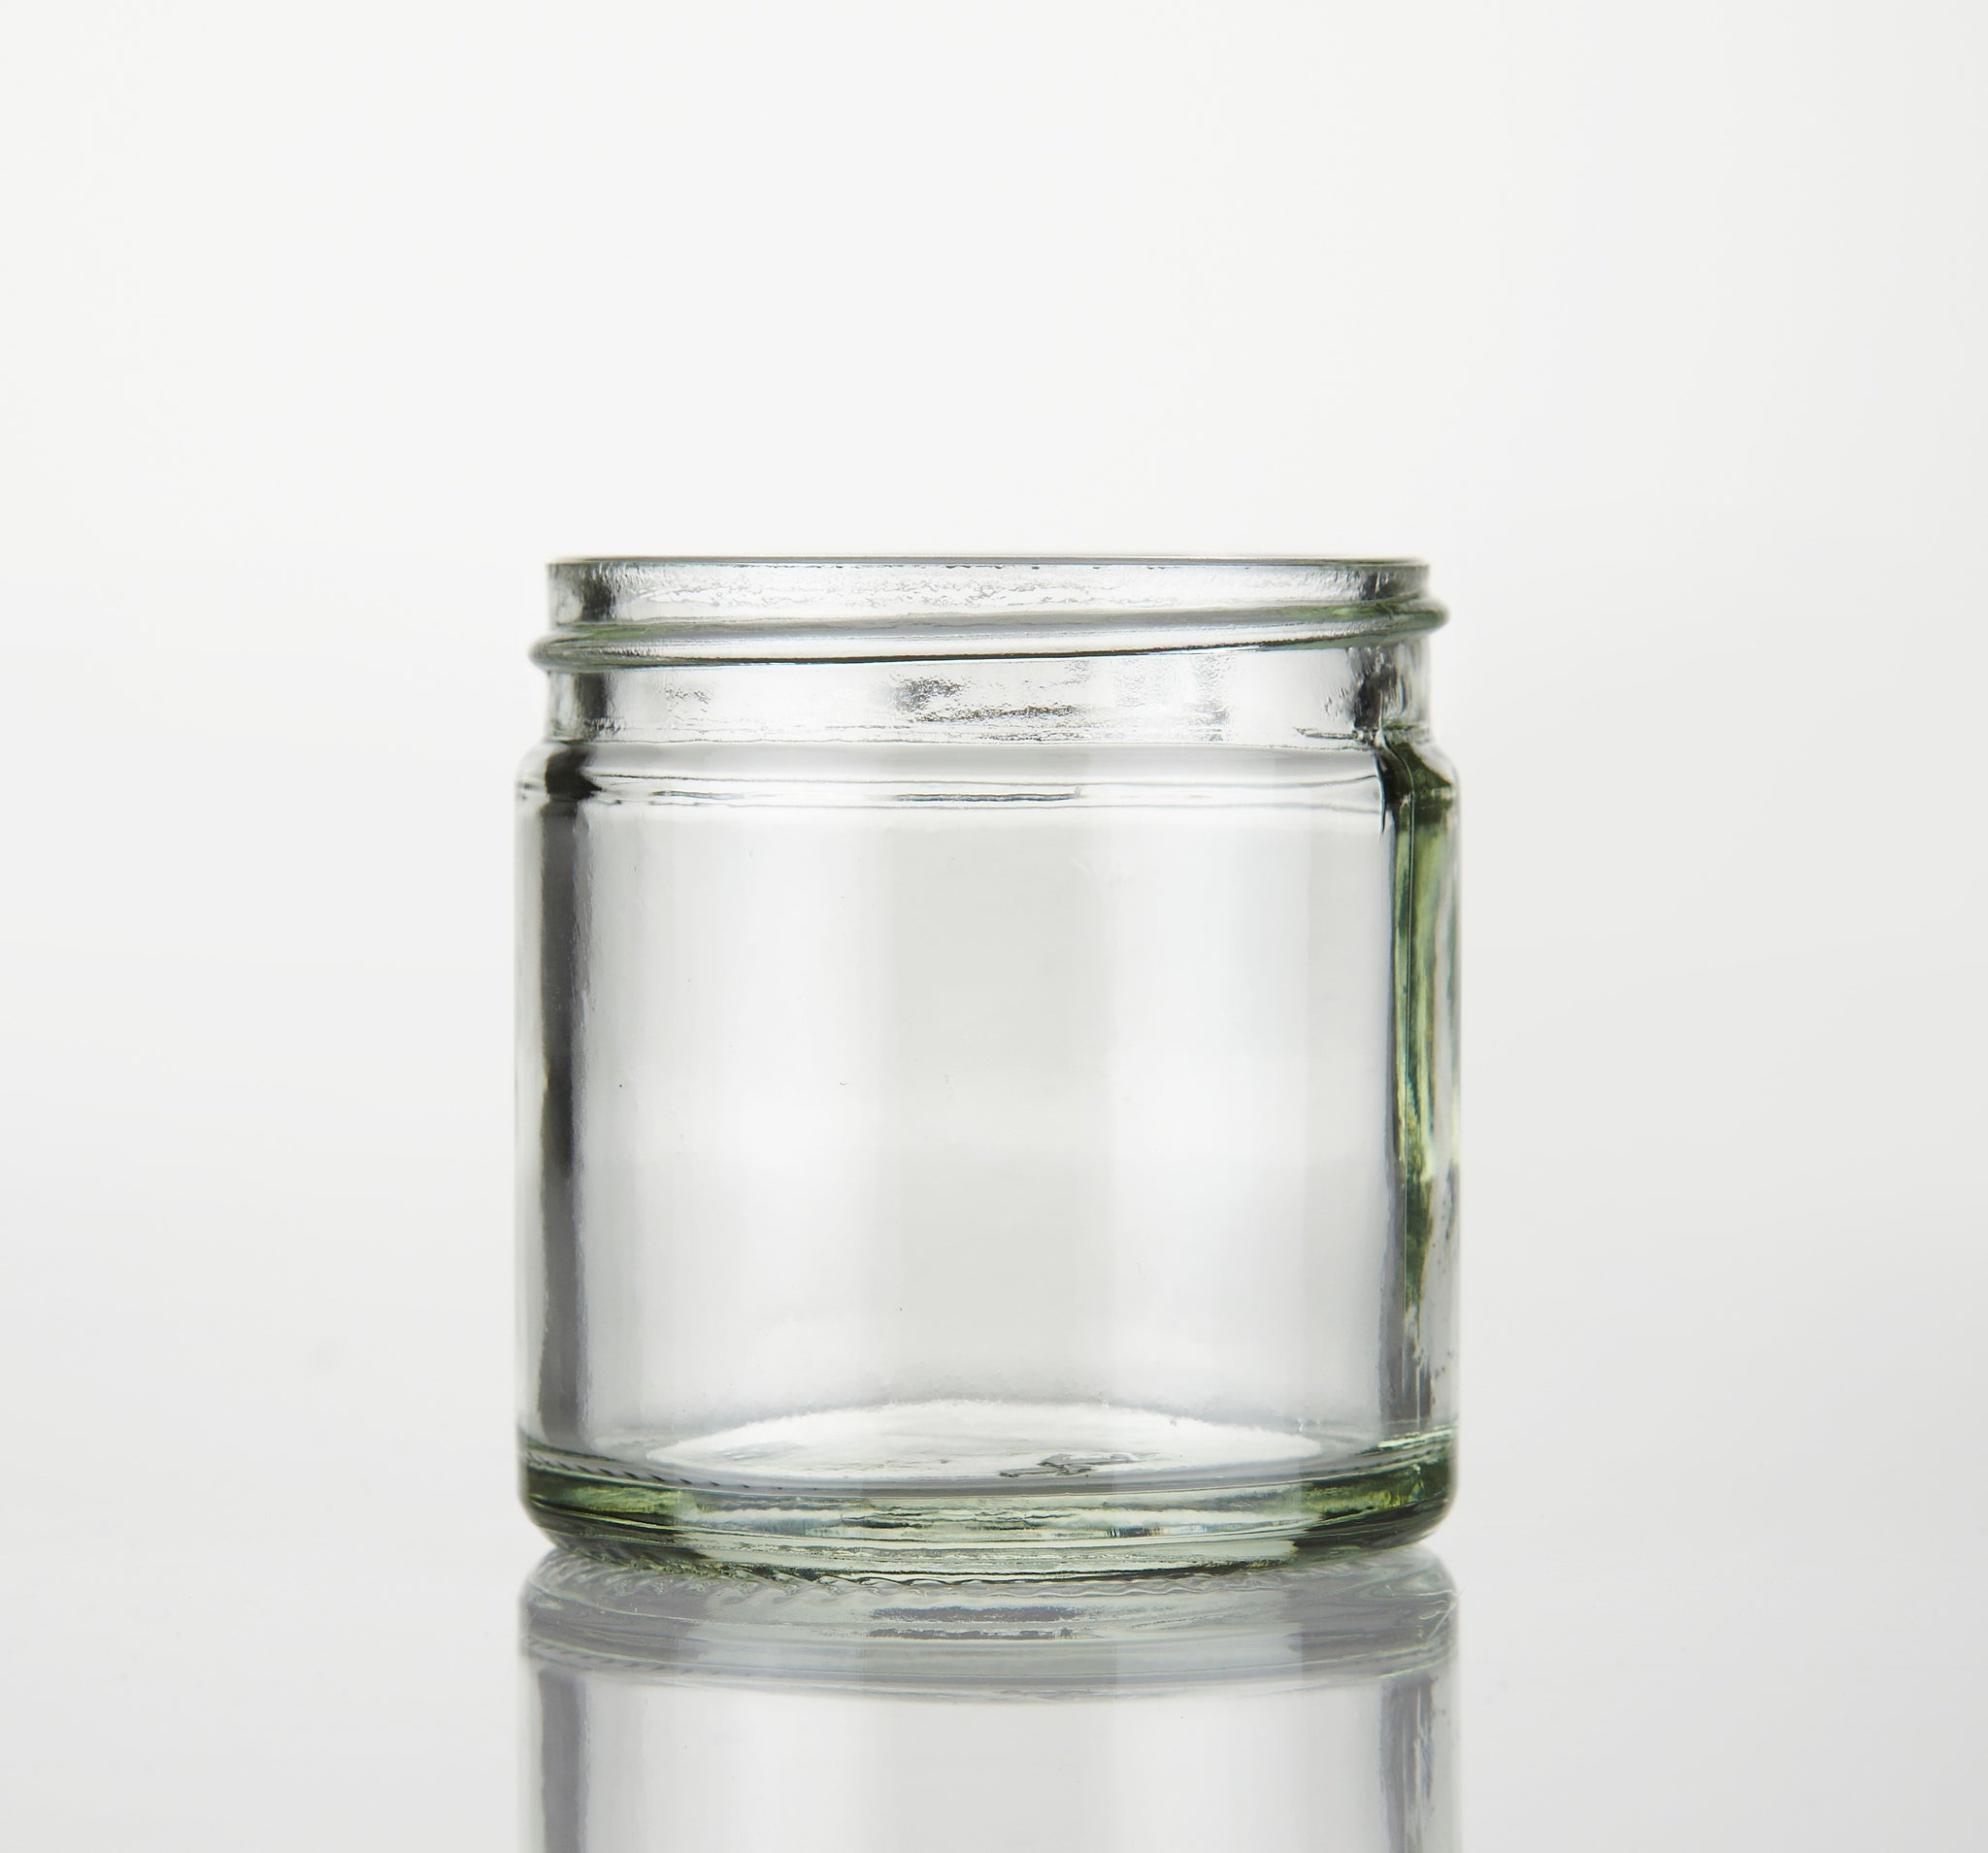 60ml Clear Glass Round Ointment Jar